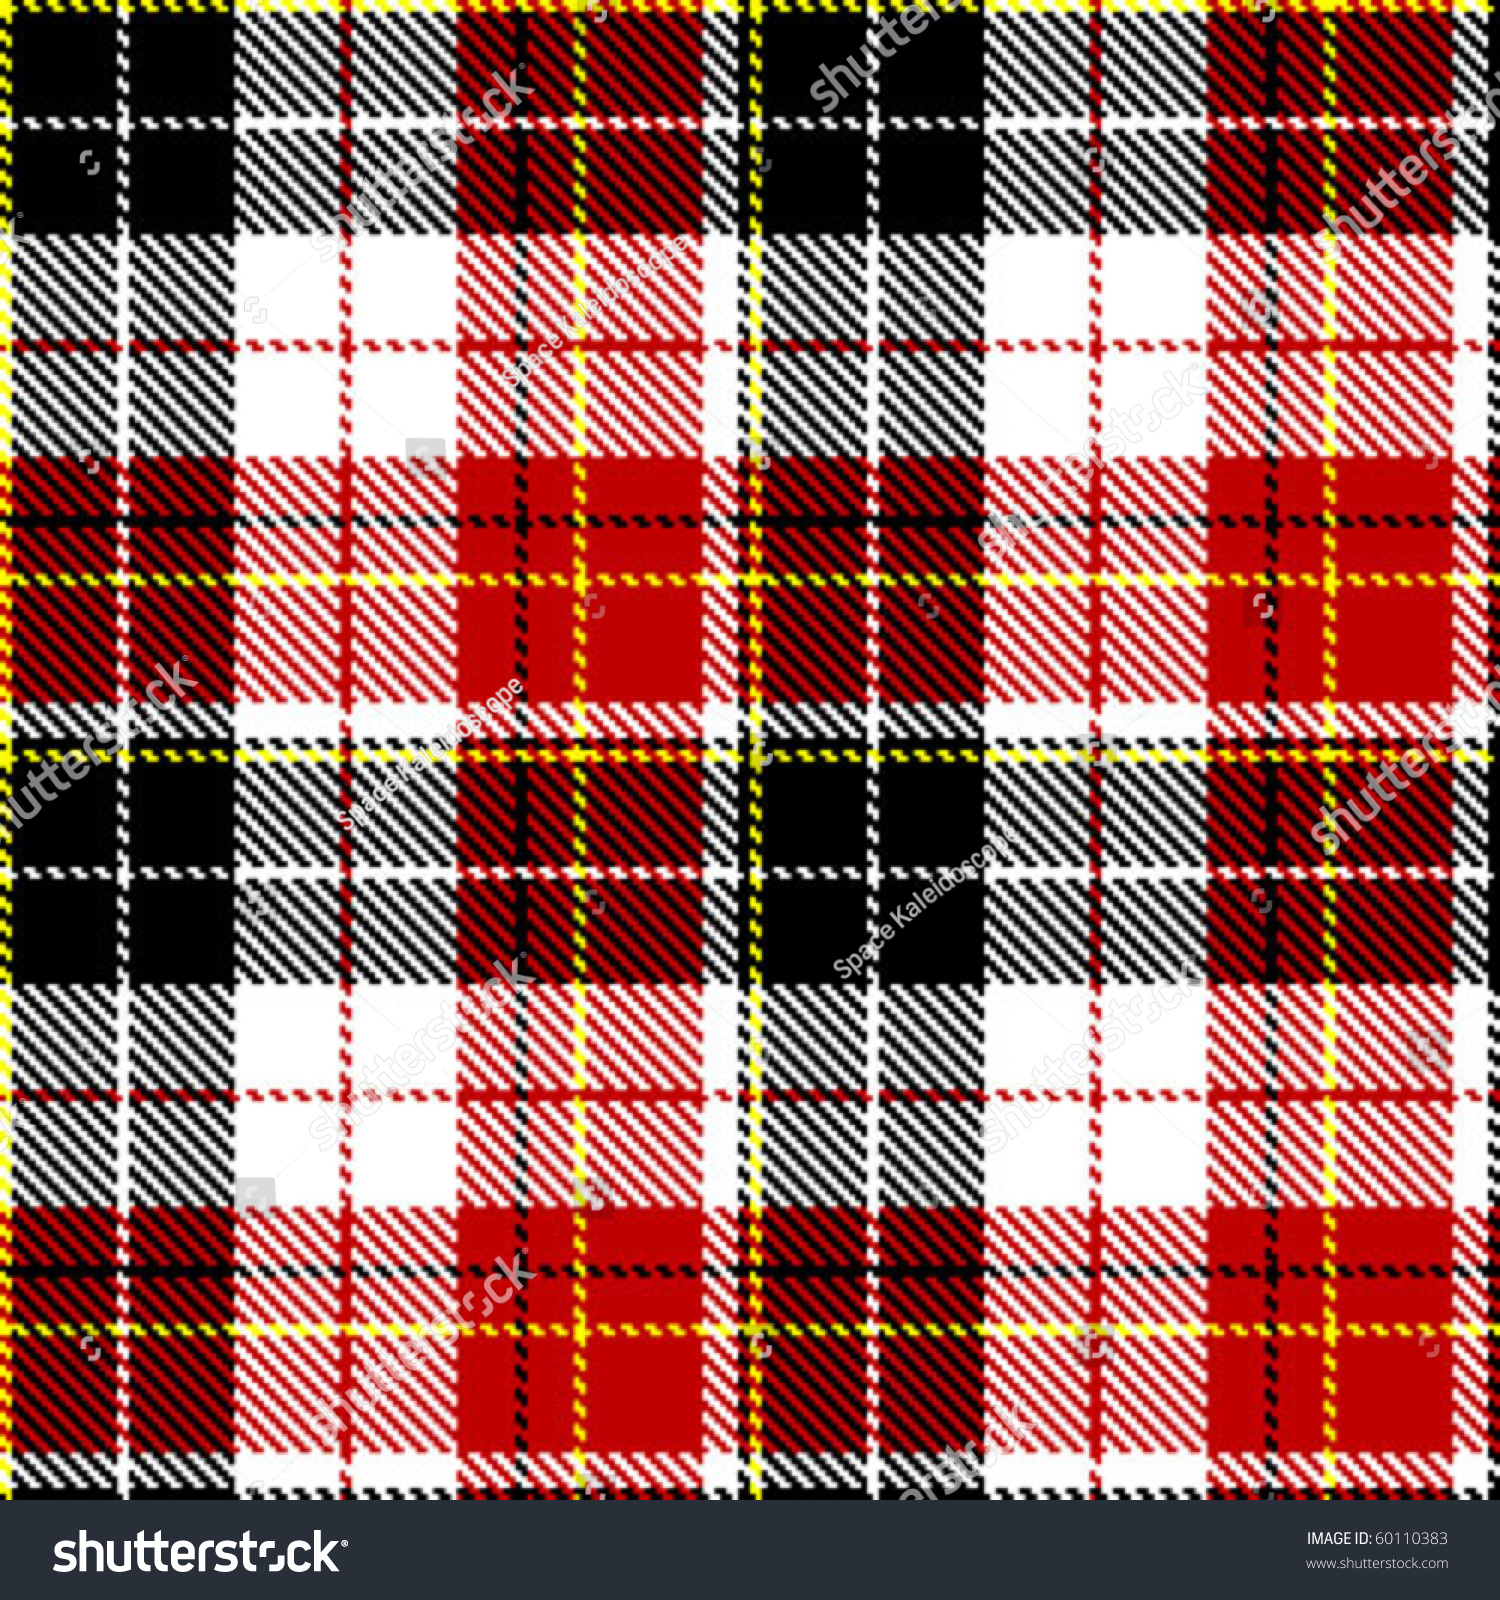 Seamless Checkered Pattern Stock Vector Illustration 60110383 ...